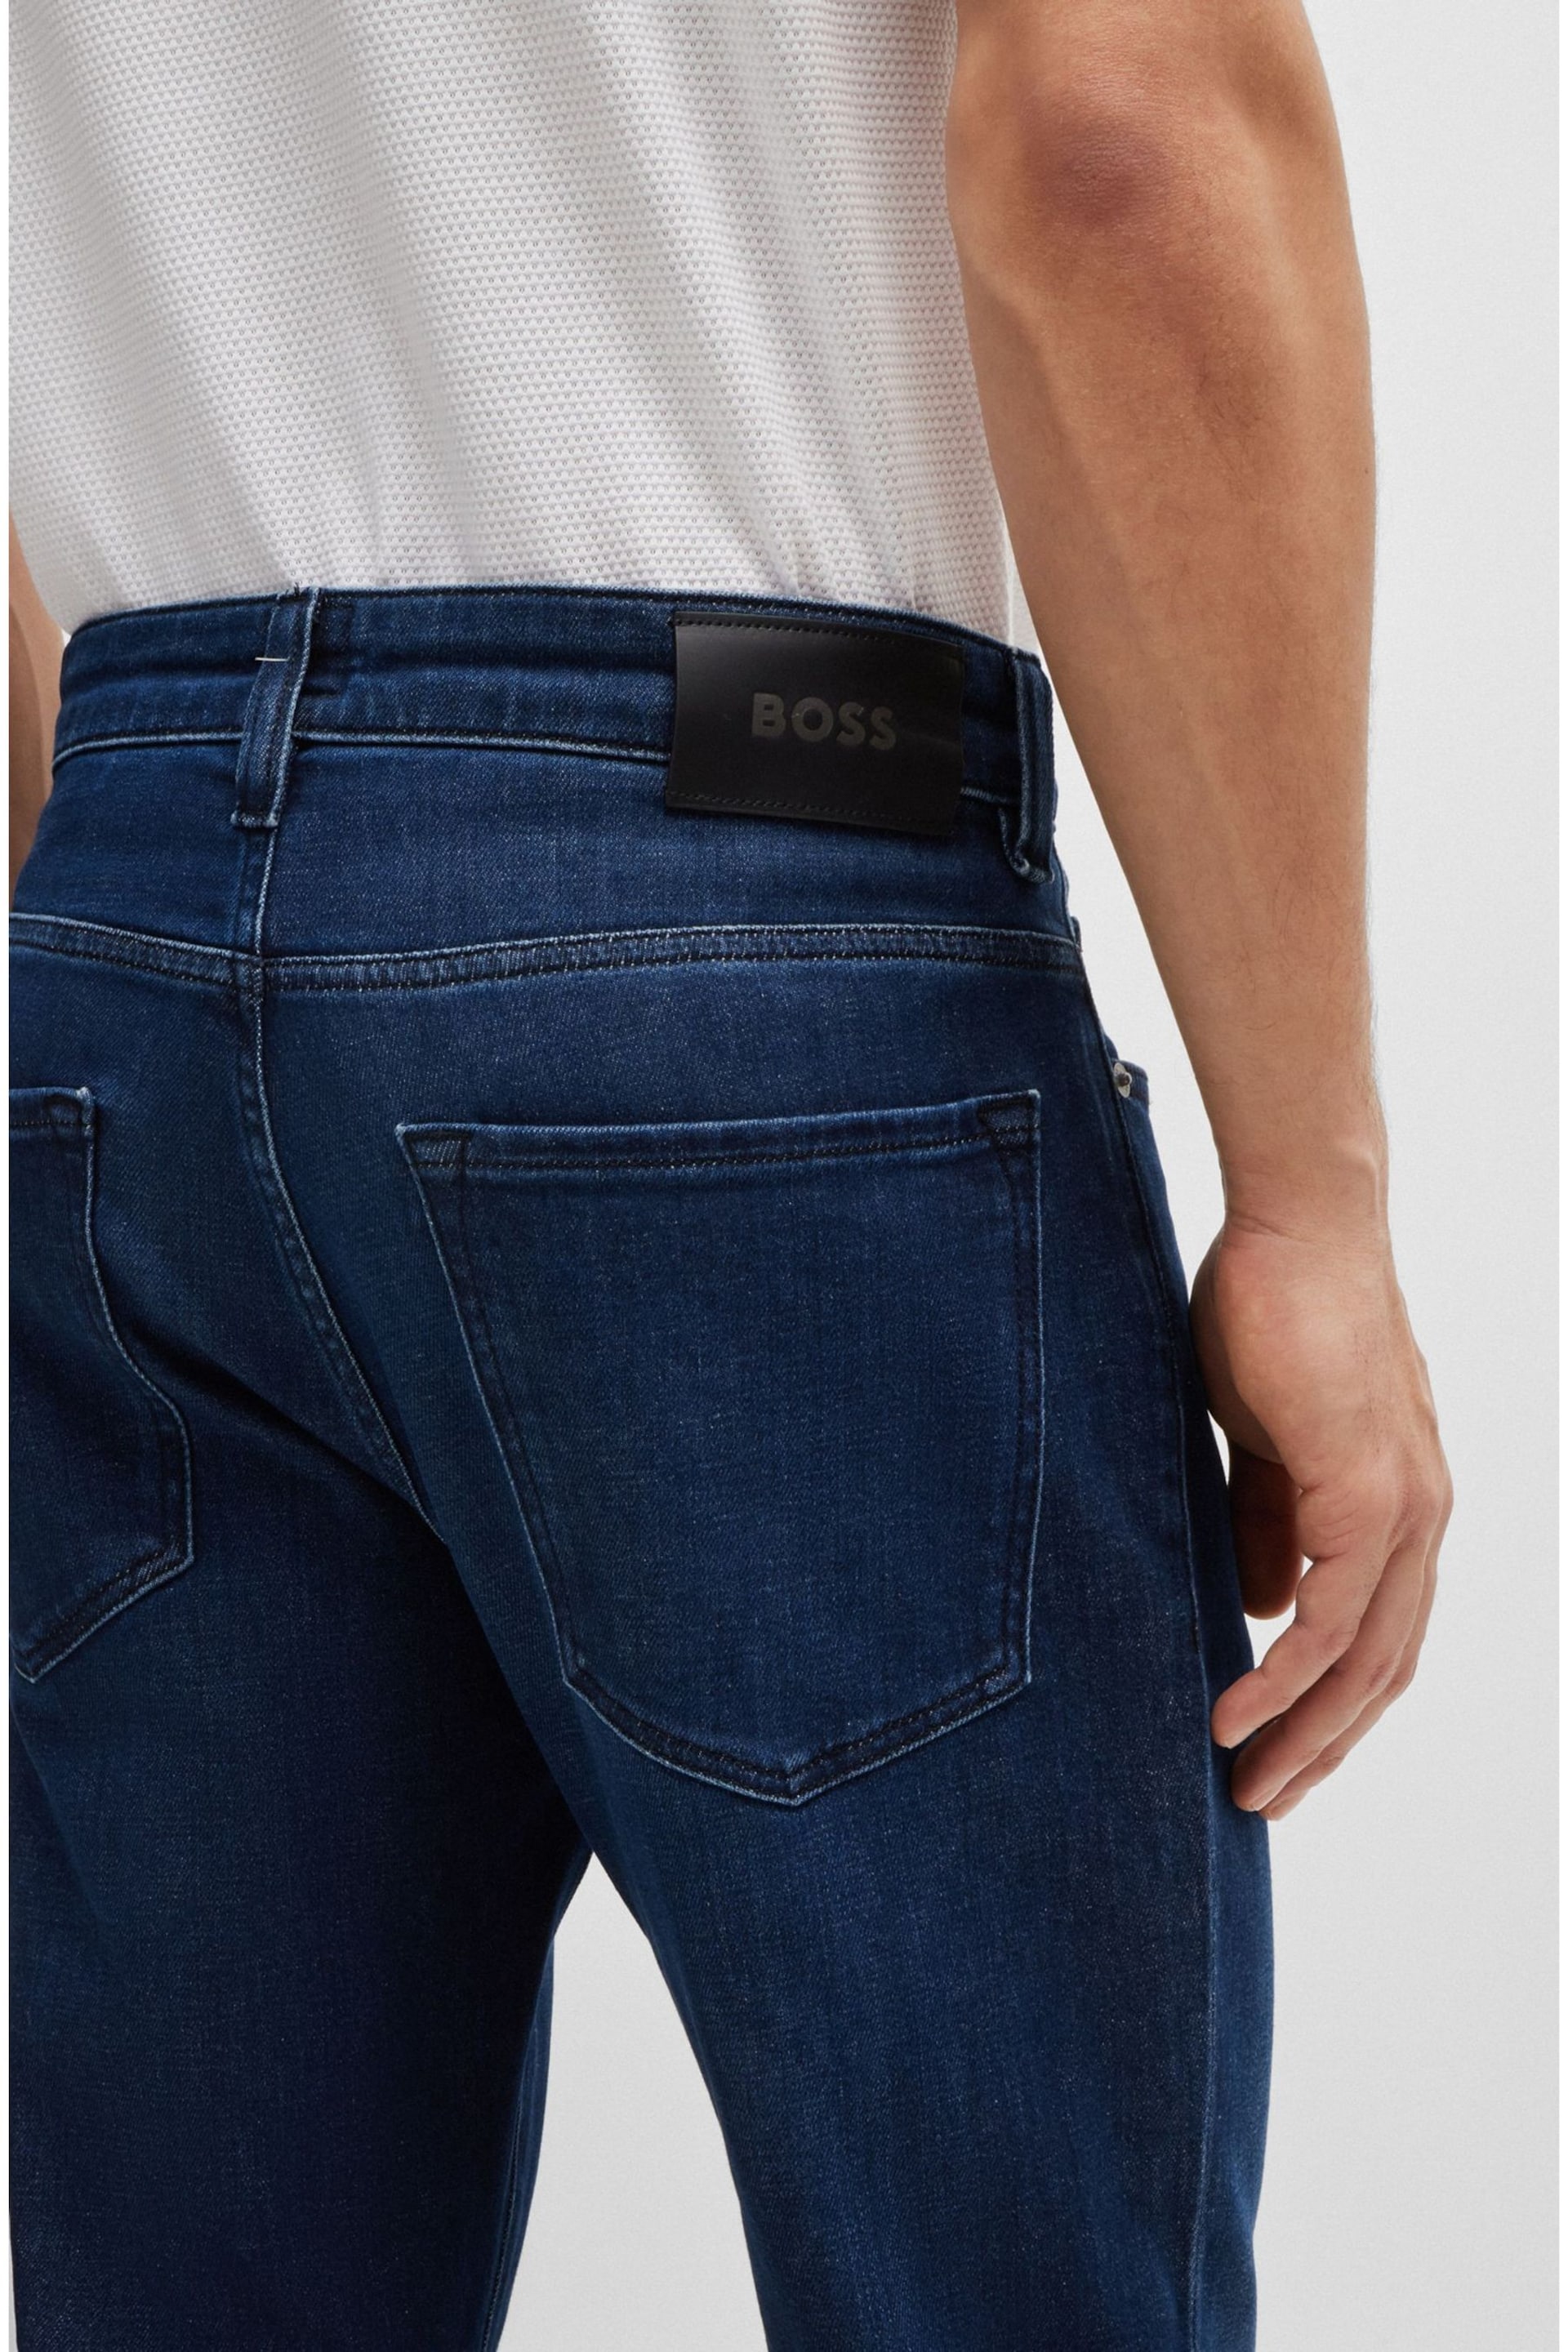 BOSS Blue Regular-Fit Jeans In Blue Comfort-Stretch Denim - Image 2 of 5